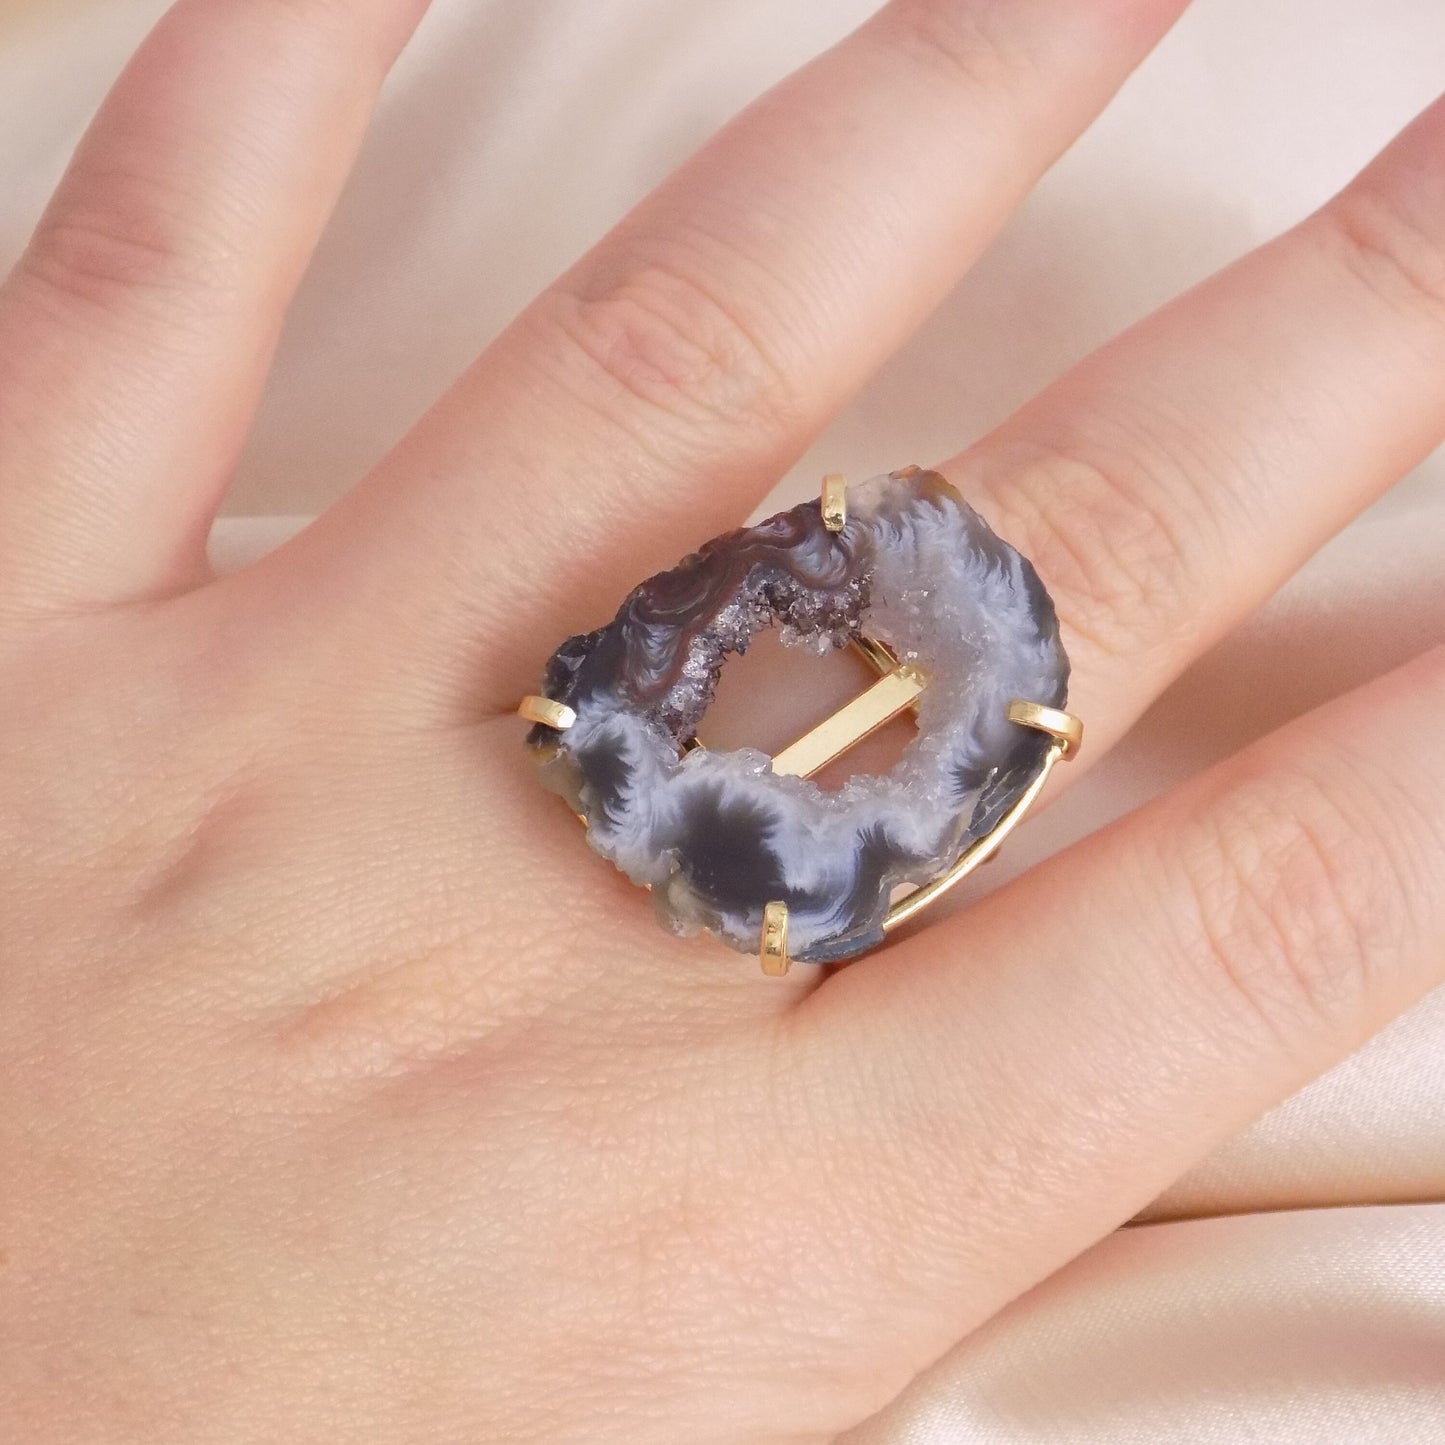 Geode Slice Ring Gold - Adjustable Crystal Rings For Women - Christmas Gift - G15-241